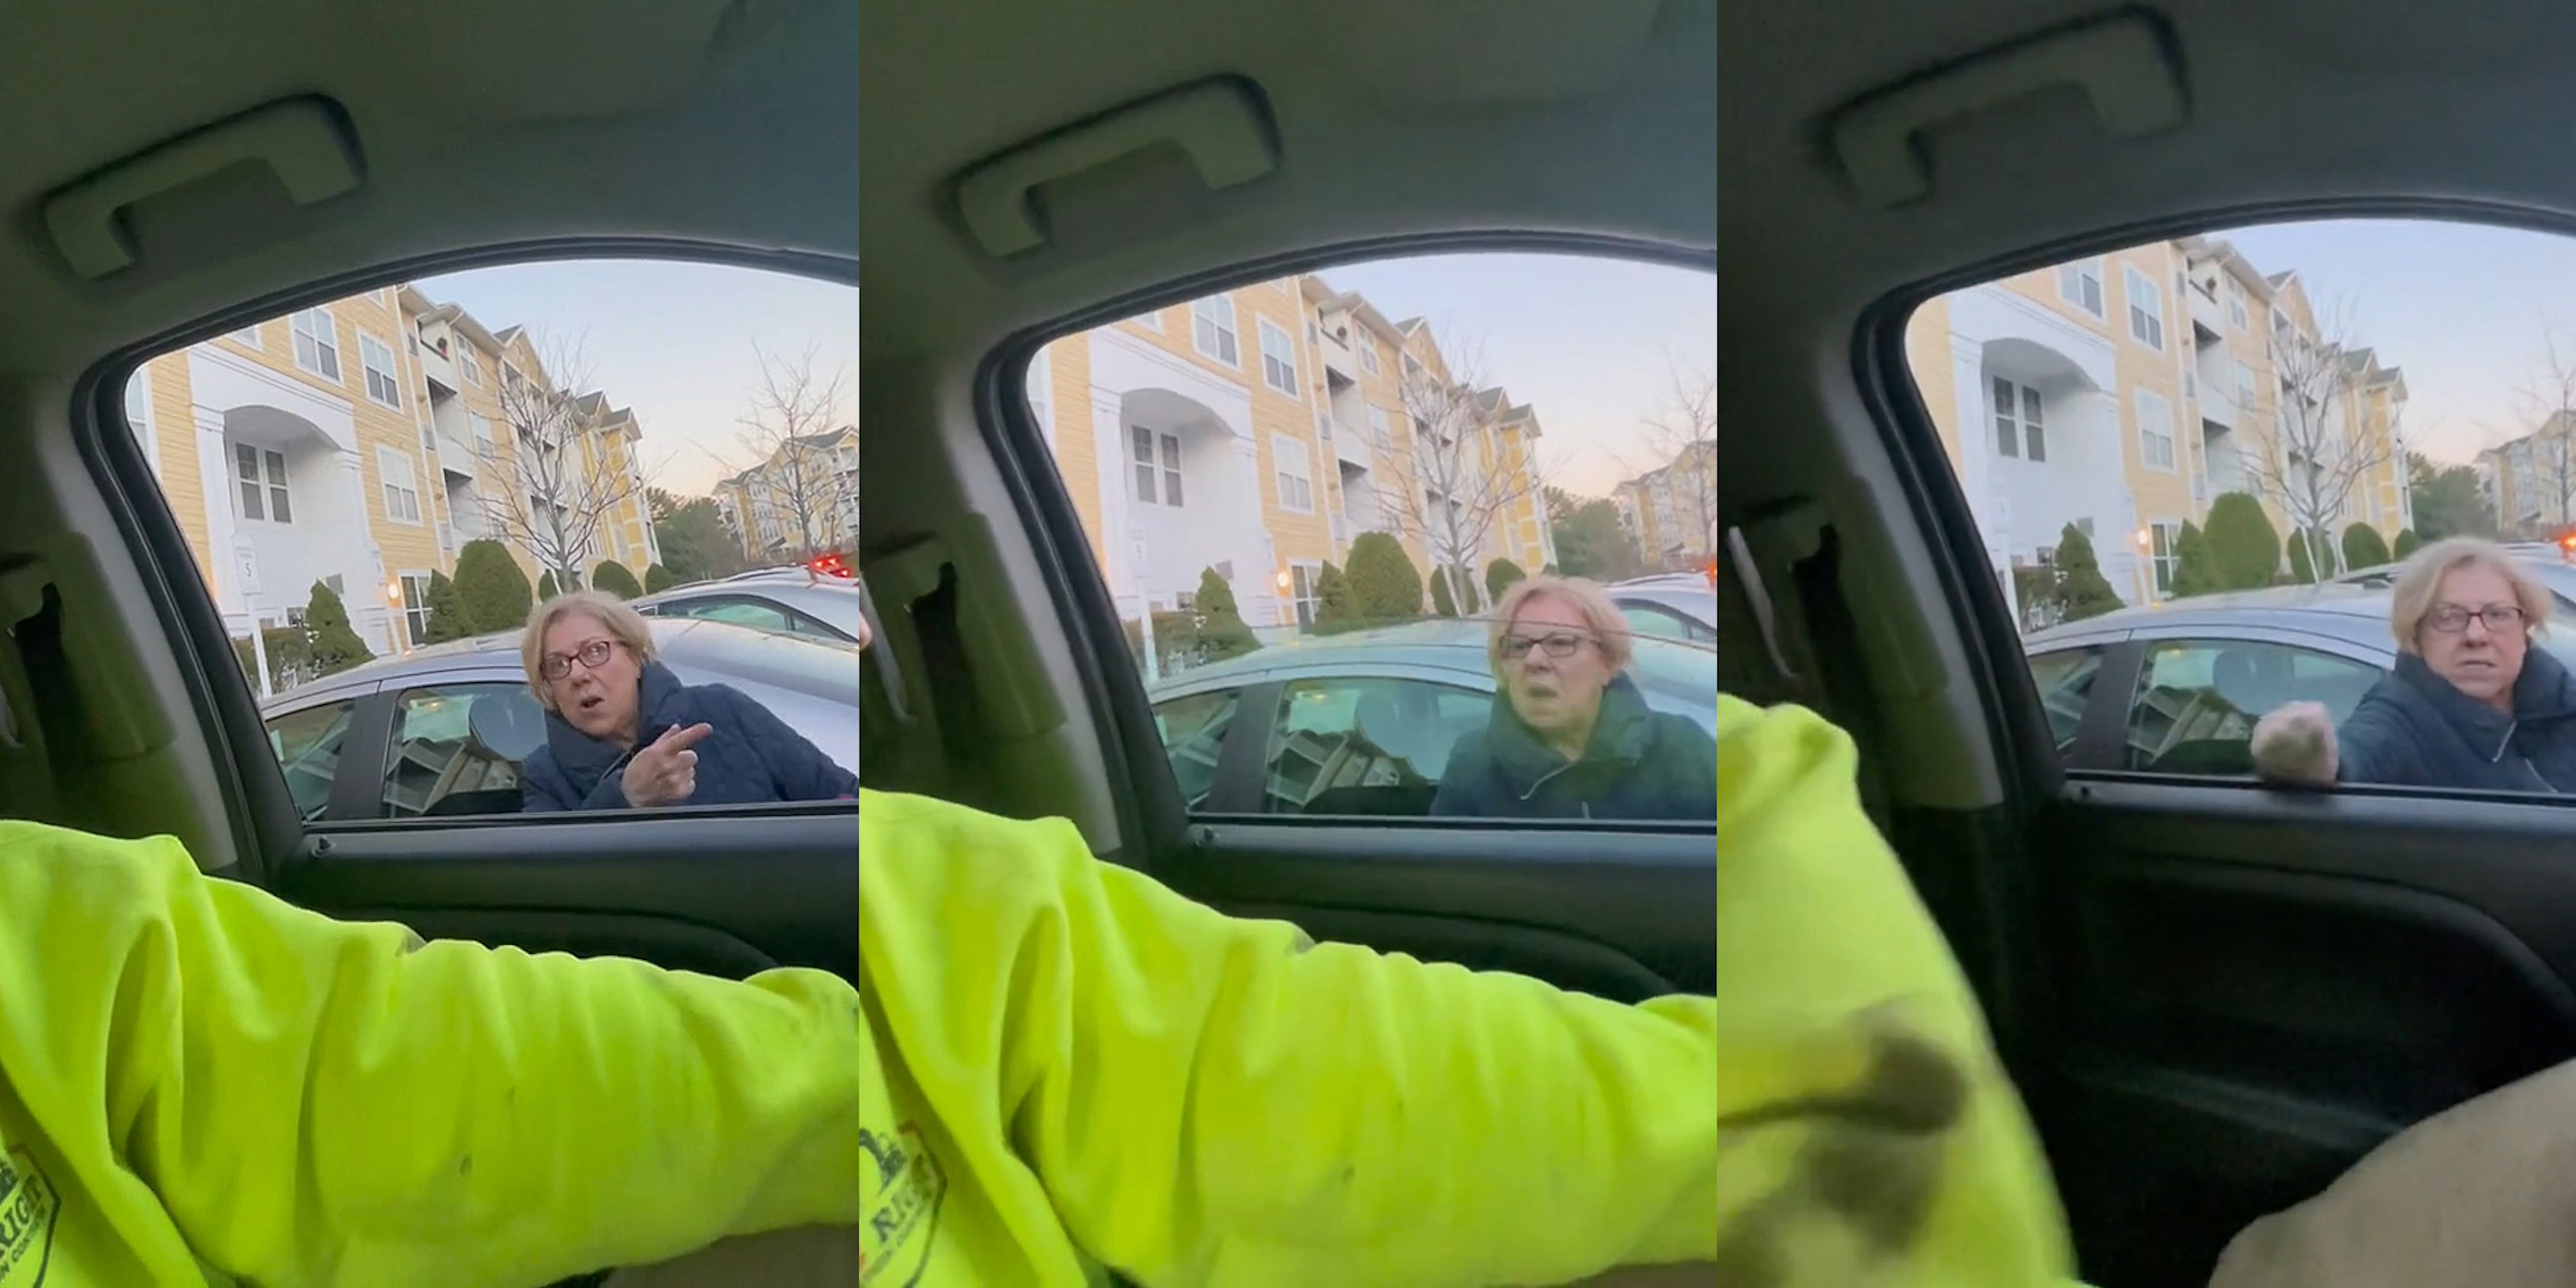 man in car while woman yells at him through window (l) man in car while woman yells at him through window (c) man in car while woman punches his window (r)